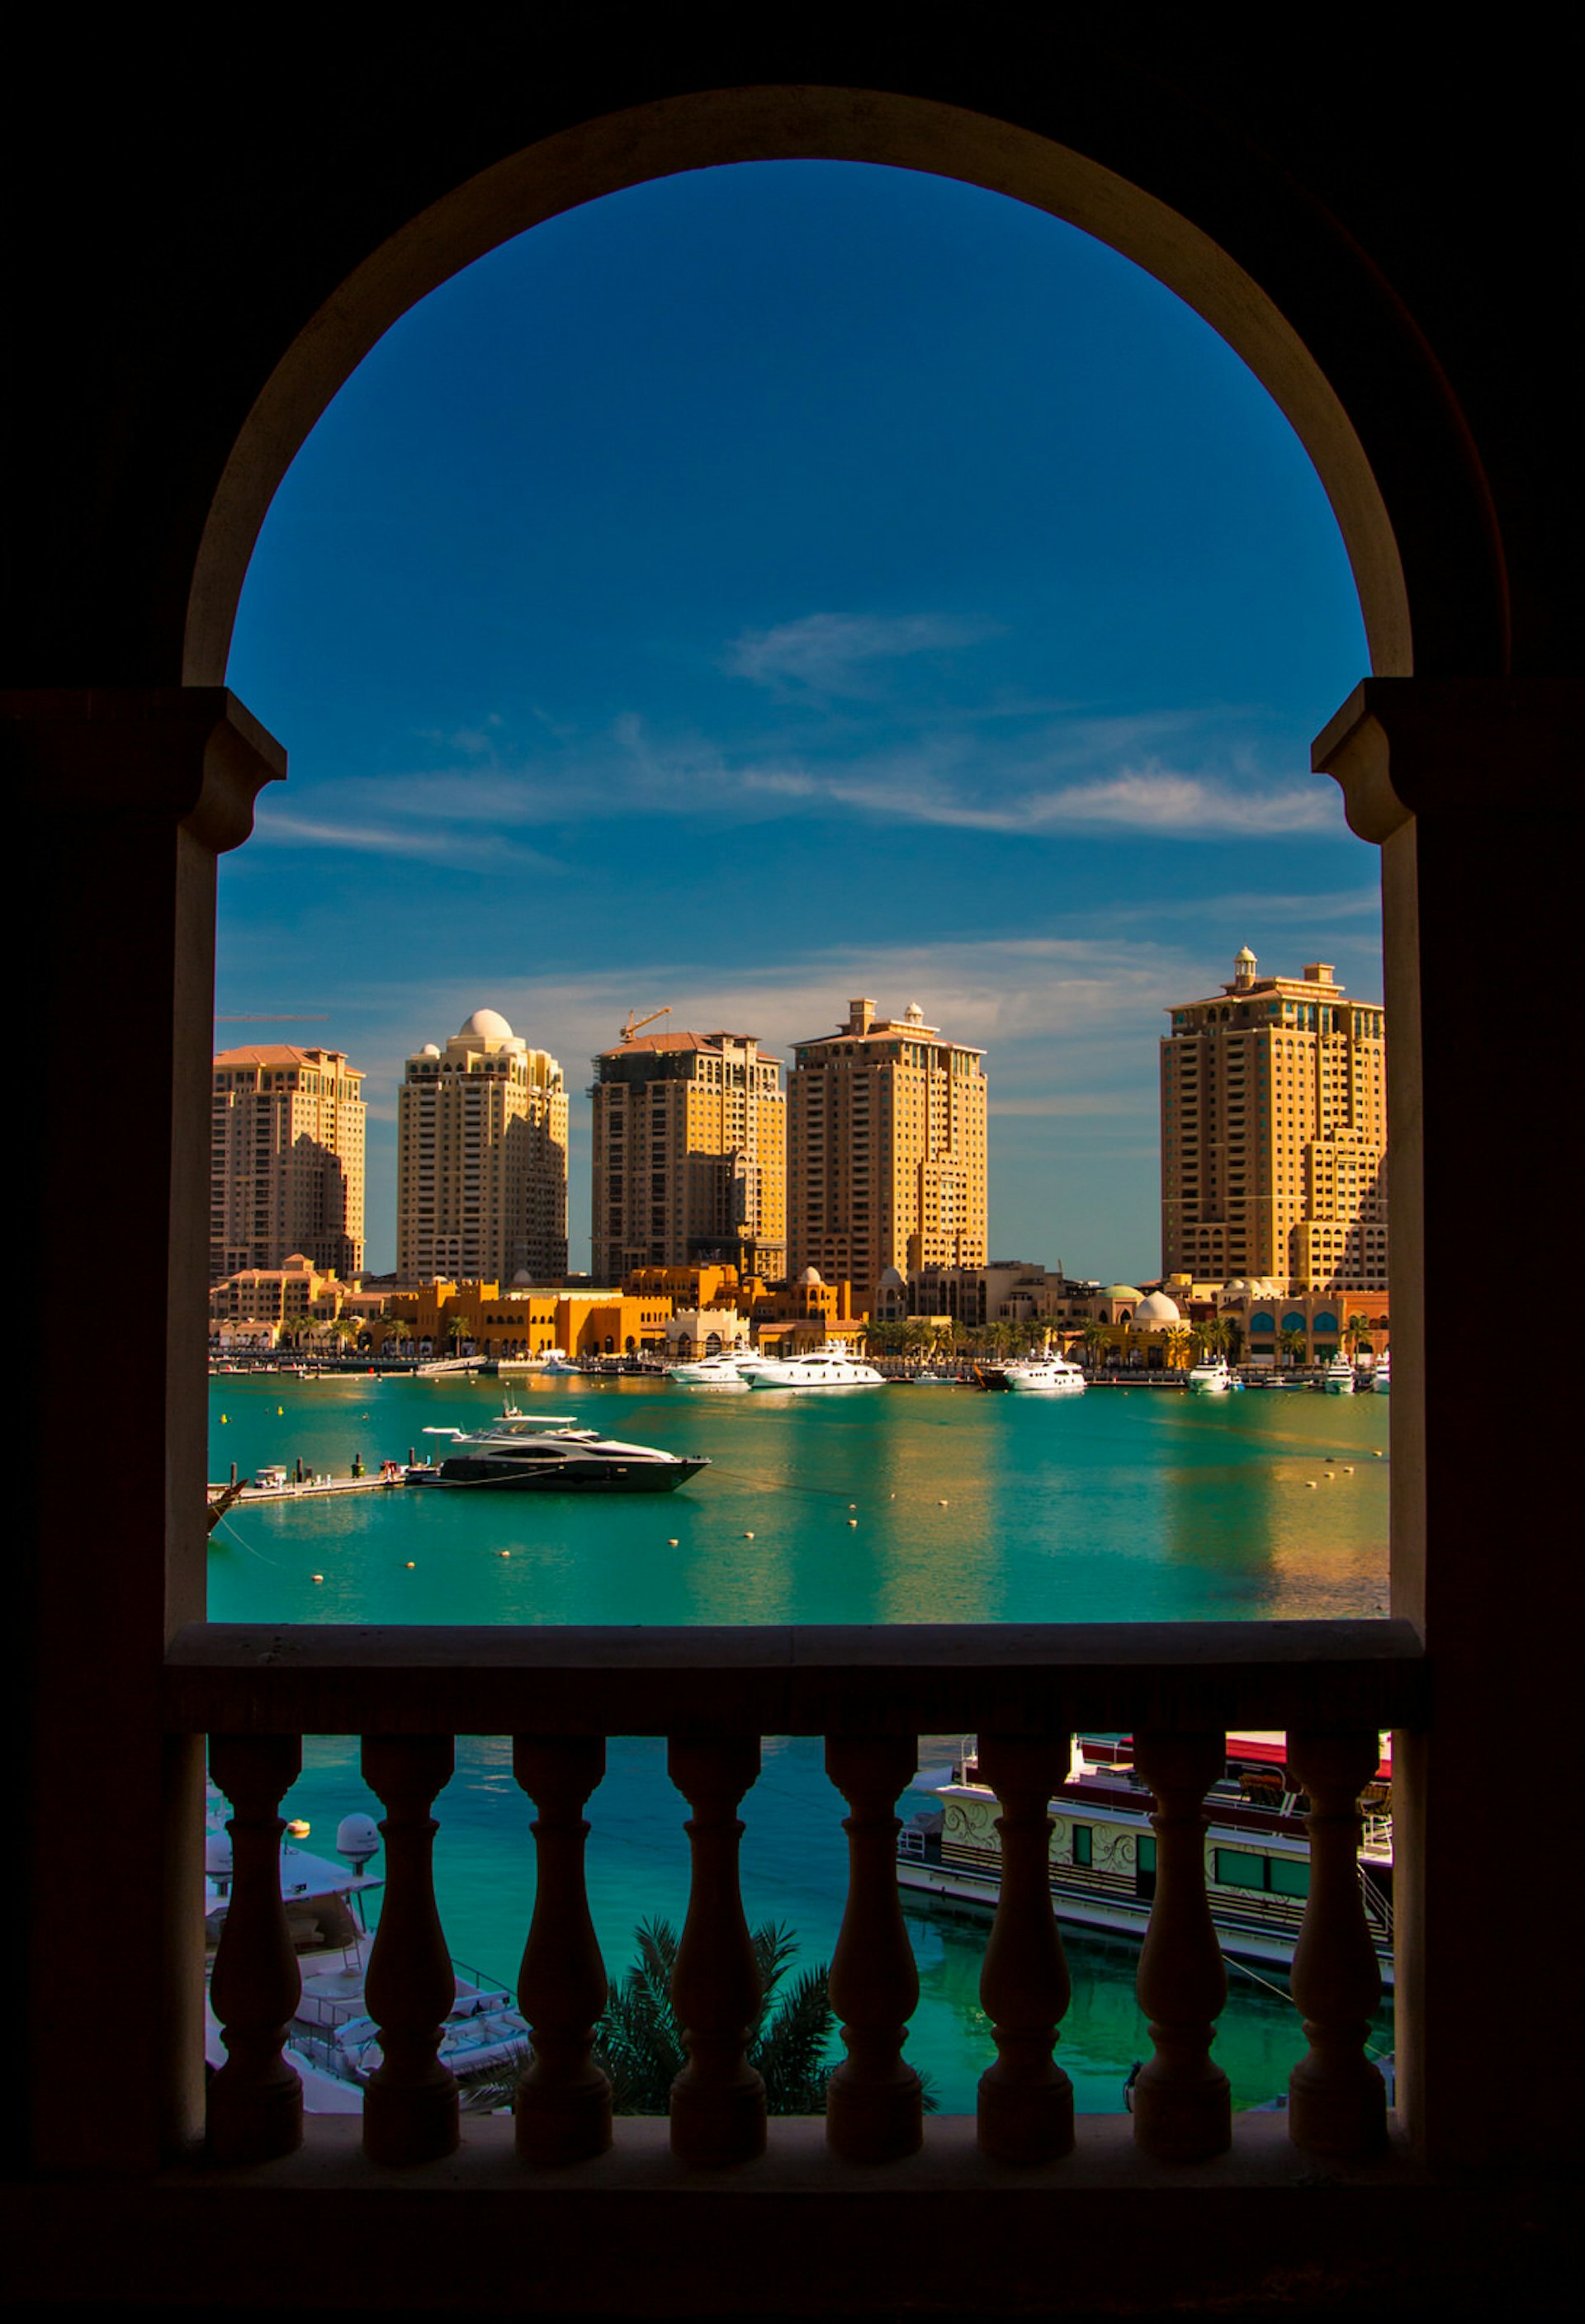 The Pearl island marina, Doha, Qatar. Image by Shutter Stuck / Shutterstock